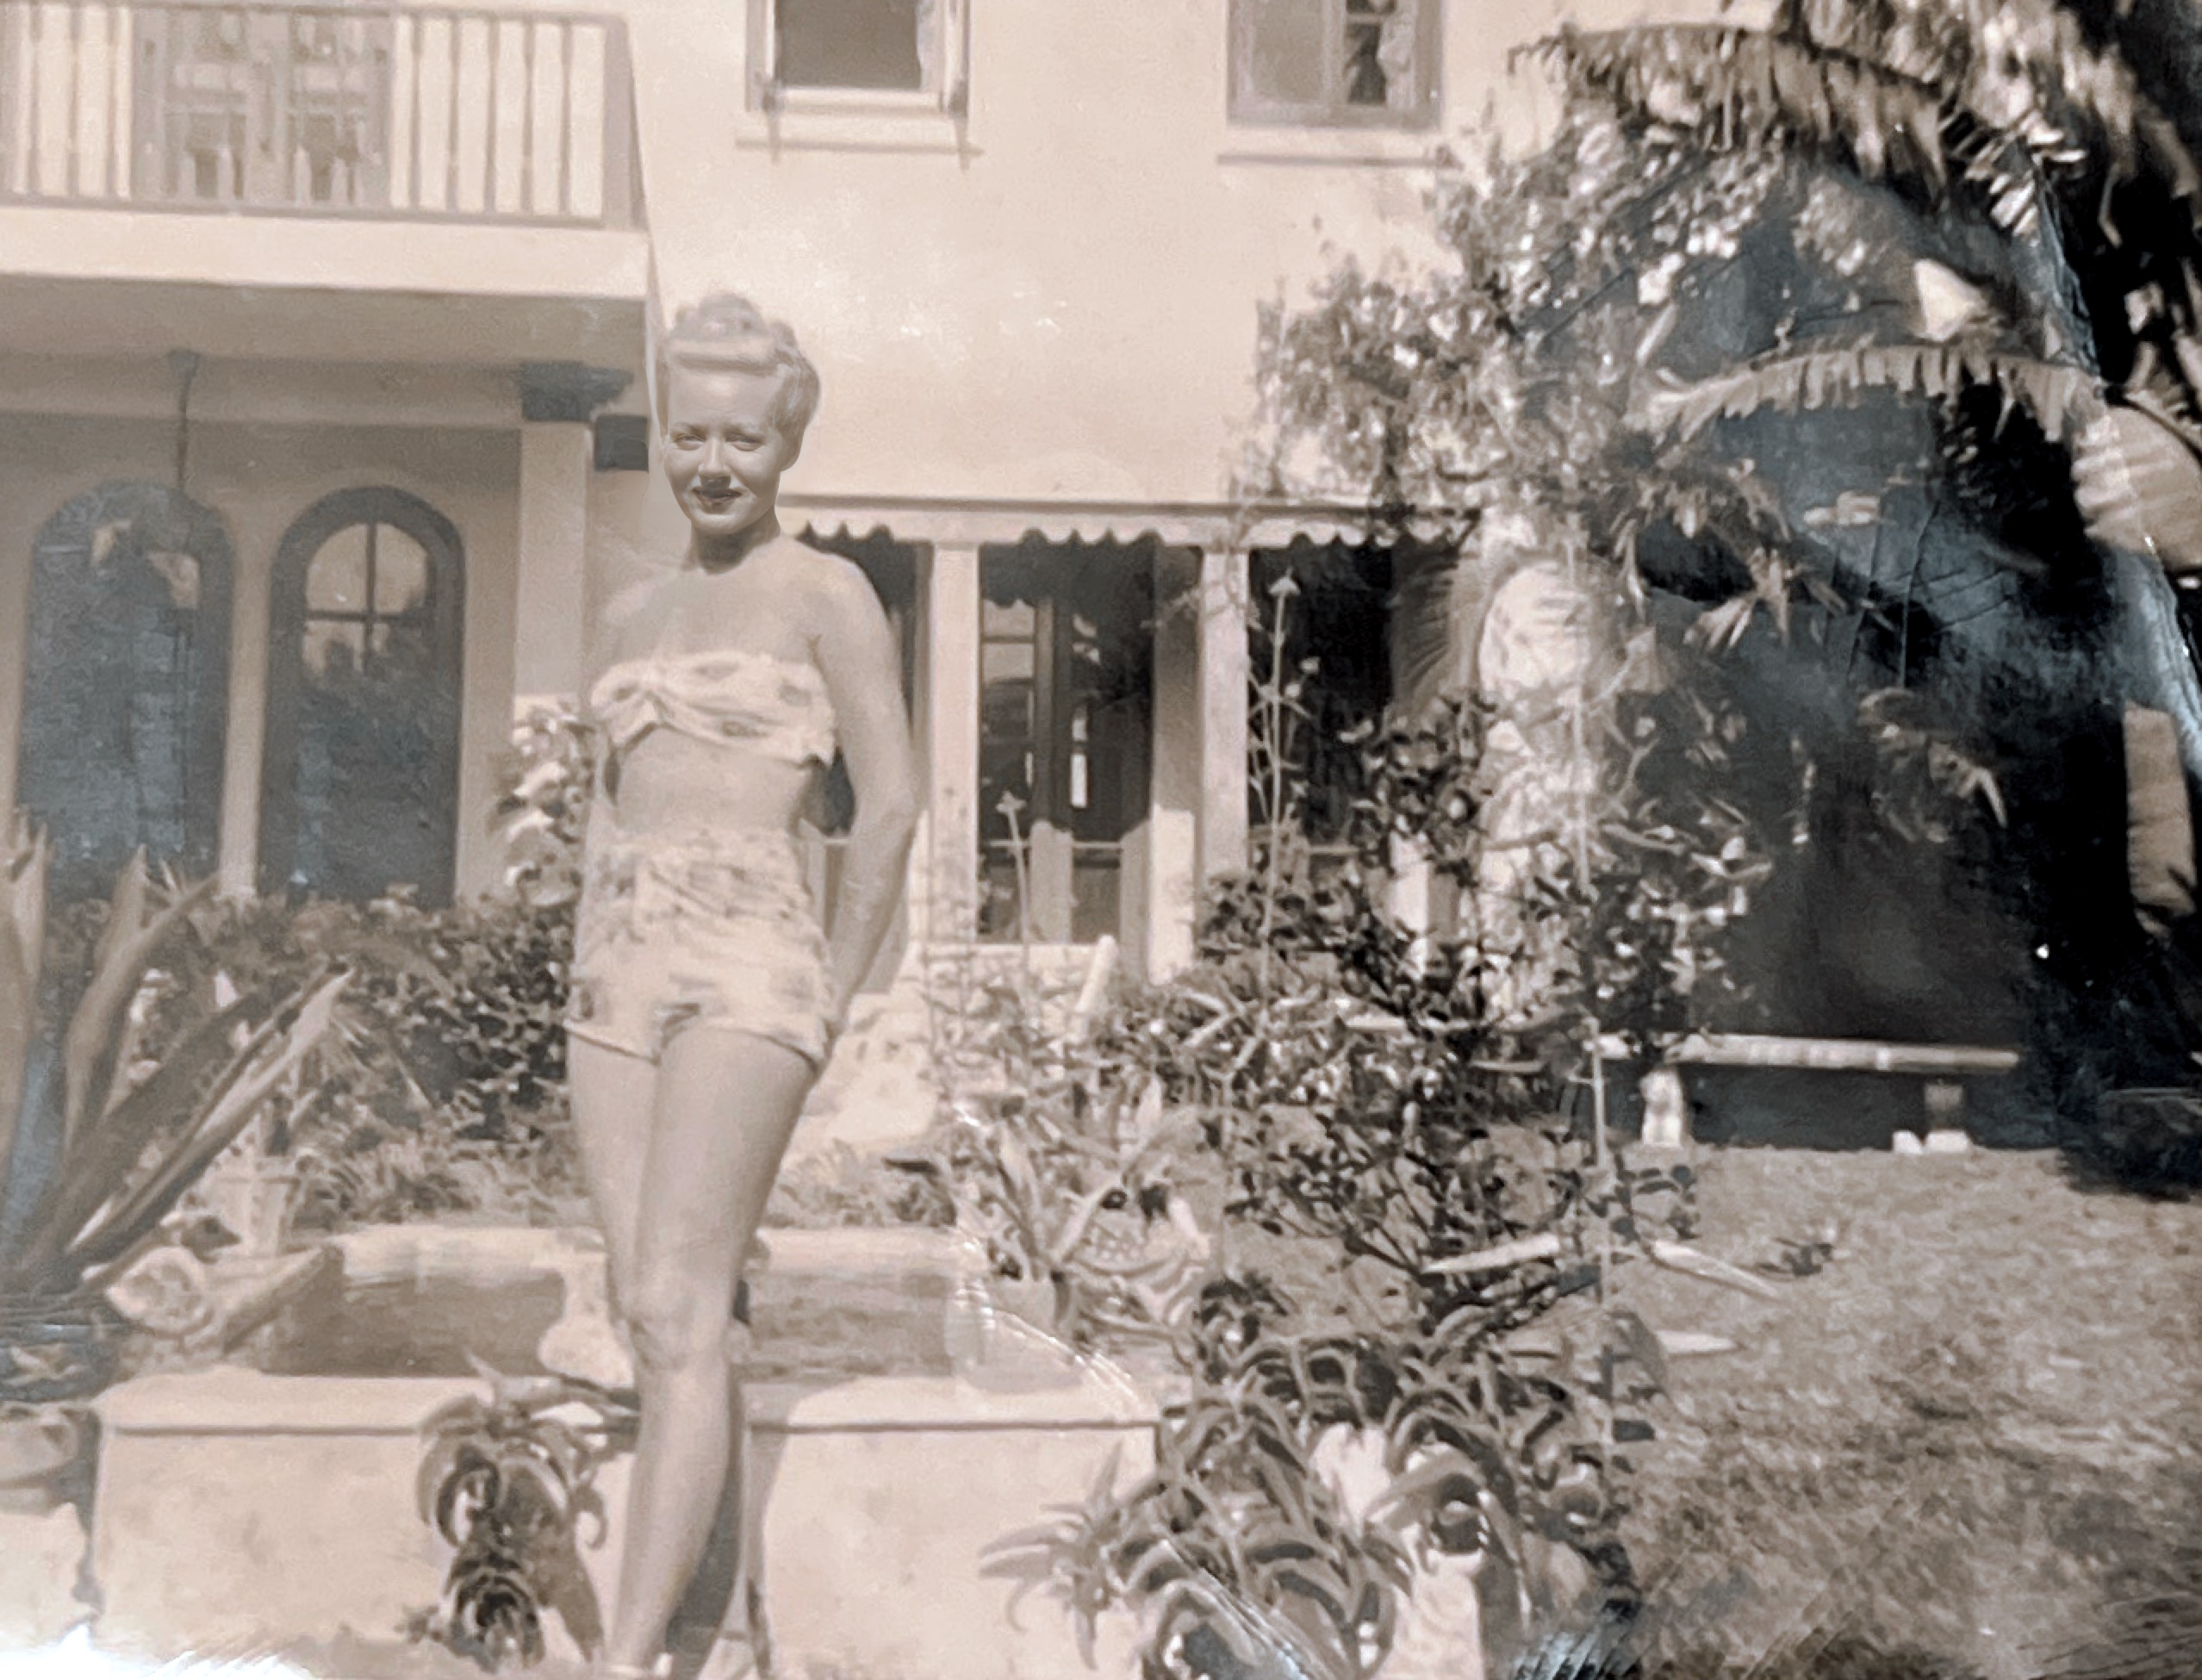 Photo of Jane Wyman by Cornelius Vanderbilt Jr. Miami Beach 1940s